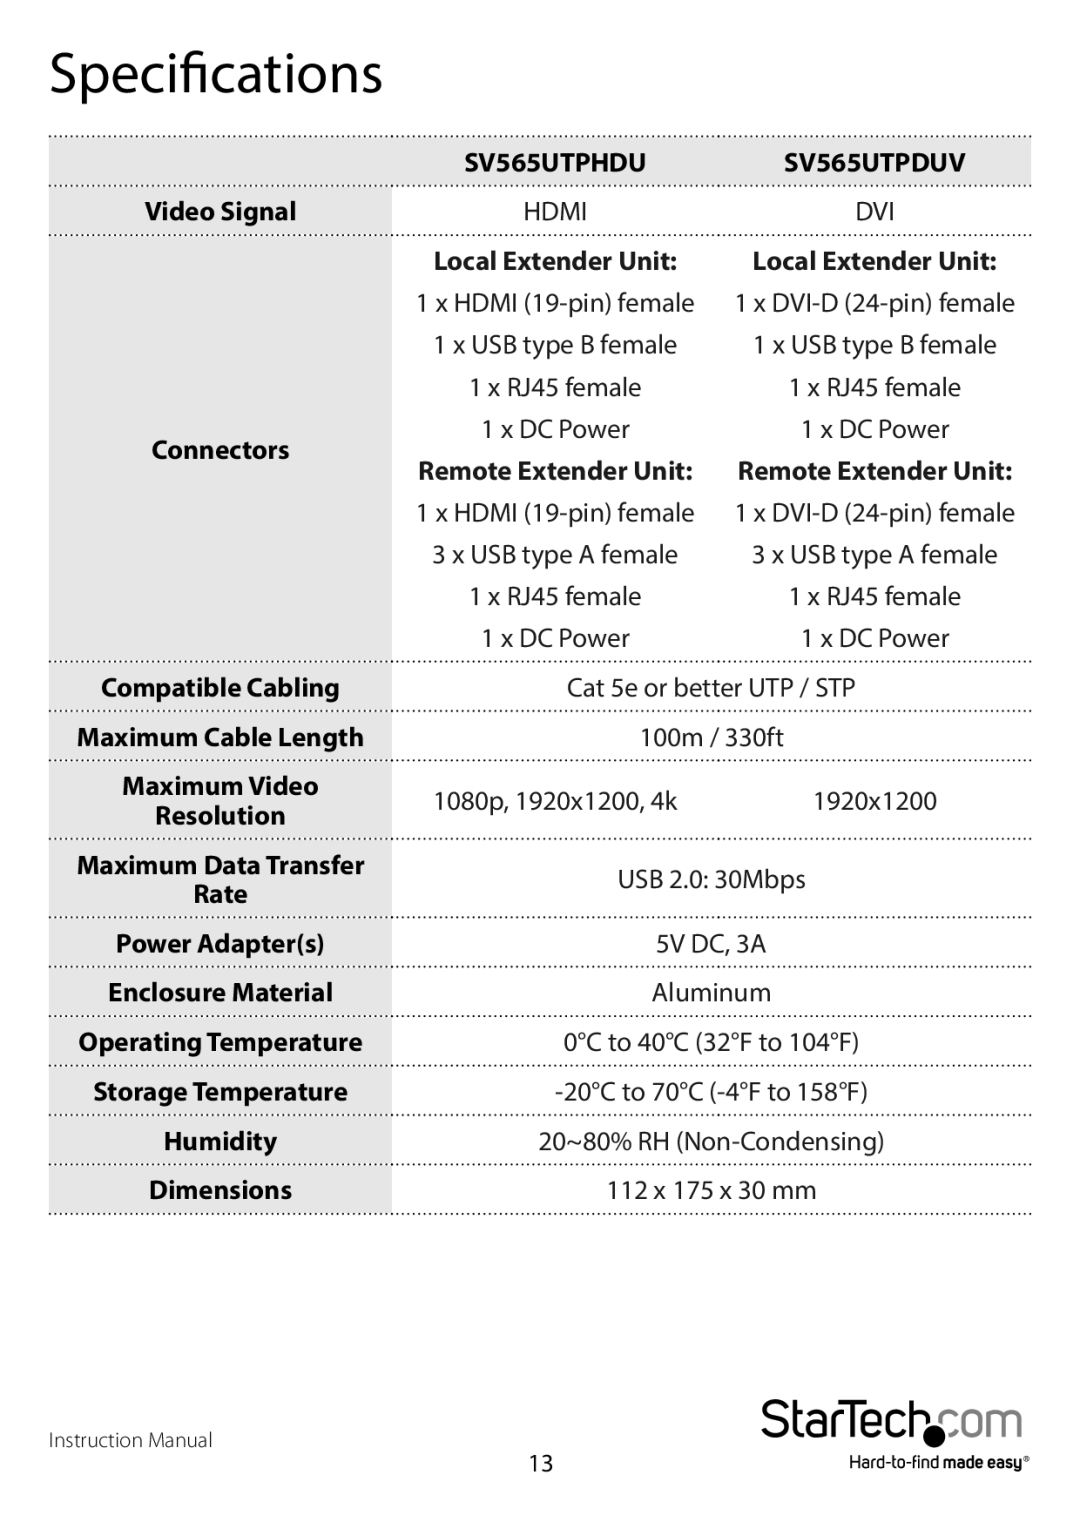 StarTech.com dvi over cat5e/6 kvm extender Specifications, Hdmi, x HDMI 19-pin female, 100m / 330ft, 1920x1200, Aluminum 